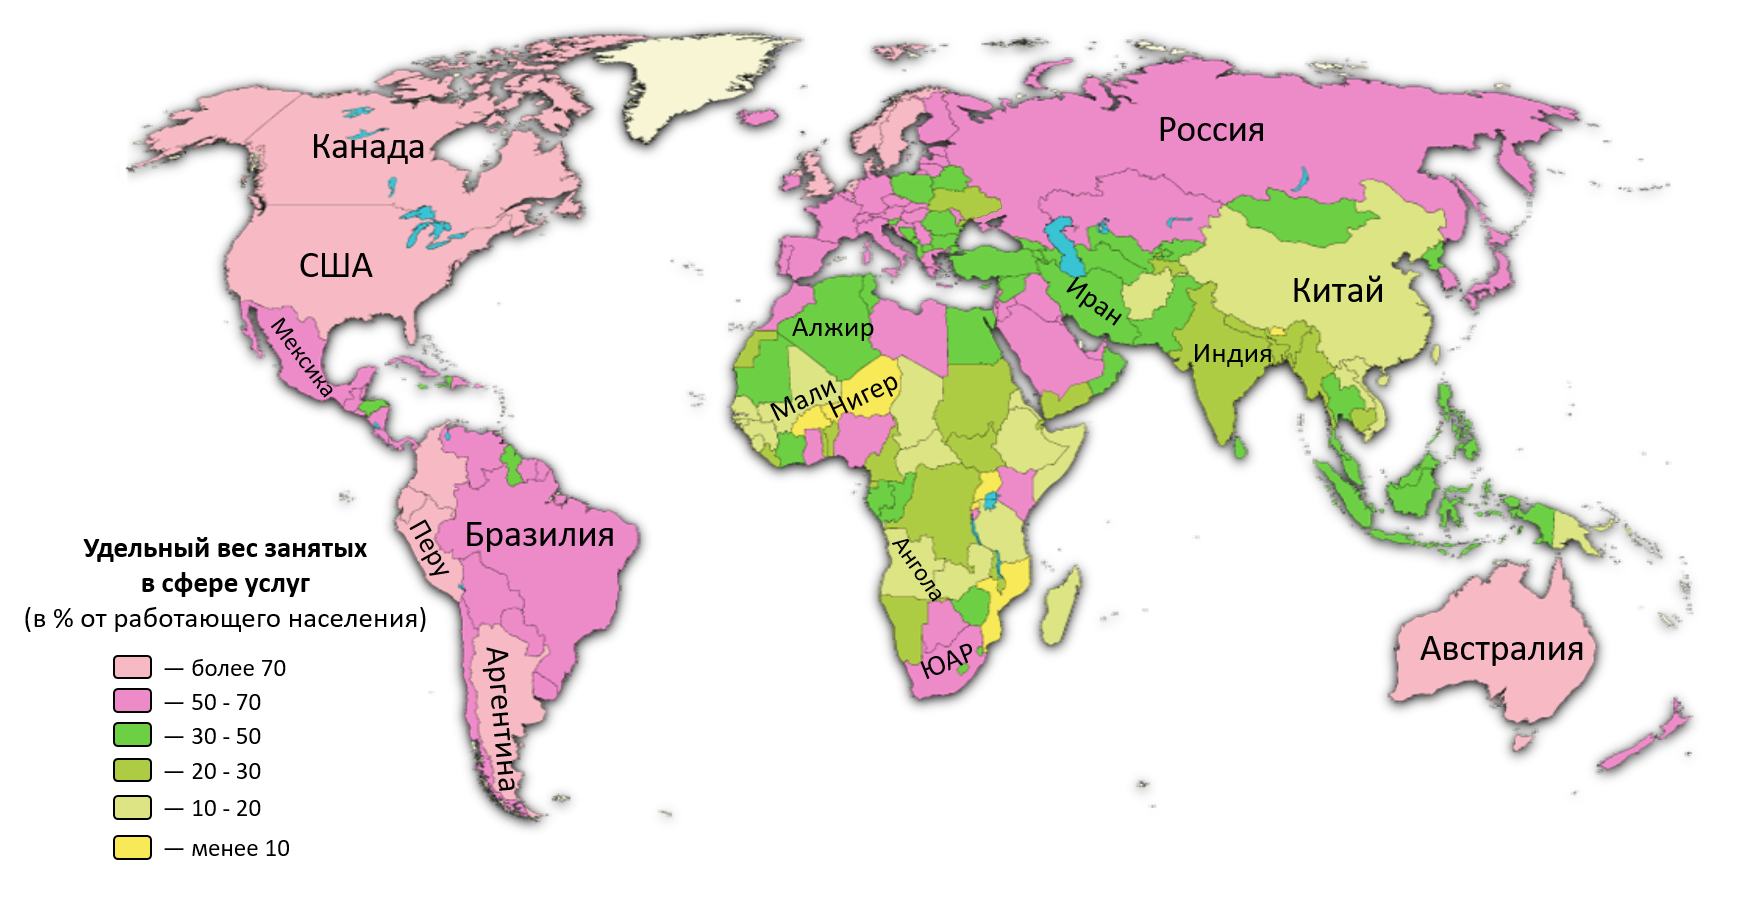 Какая страна наименее развита. Развитые и развивающиеся страны карта. Карта развитых стран. Развивающиеся страны на карте.